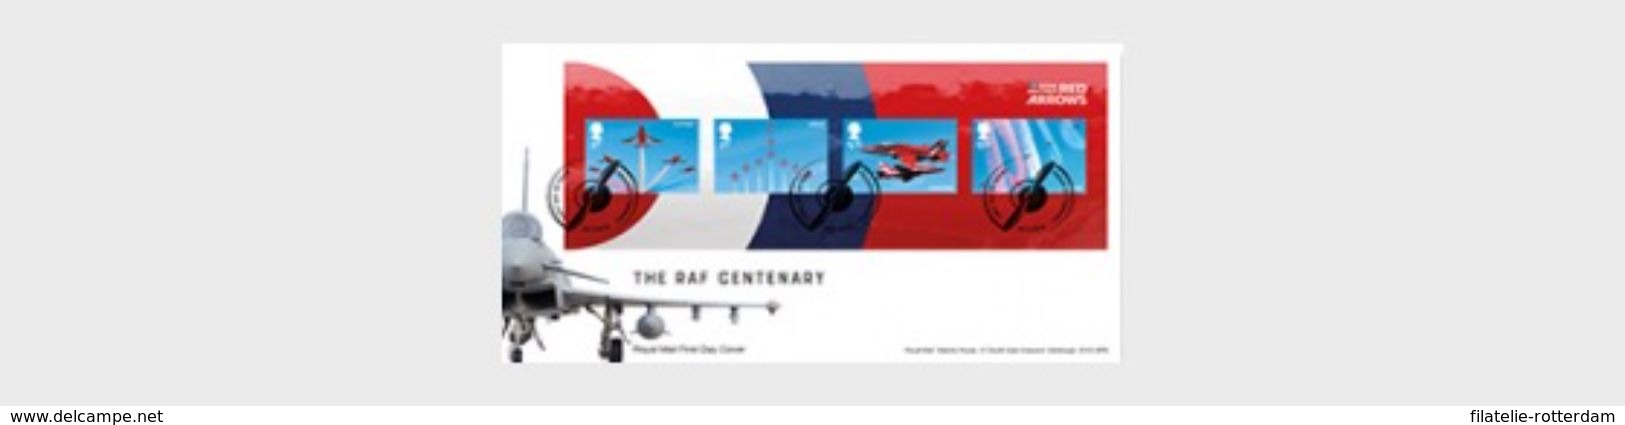 Groot-Brittannië / Great Britain - Postfris / MNH - FDC Sheet The RAF Centenary 2018 - Nuovi